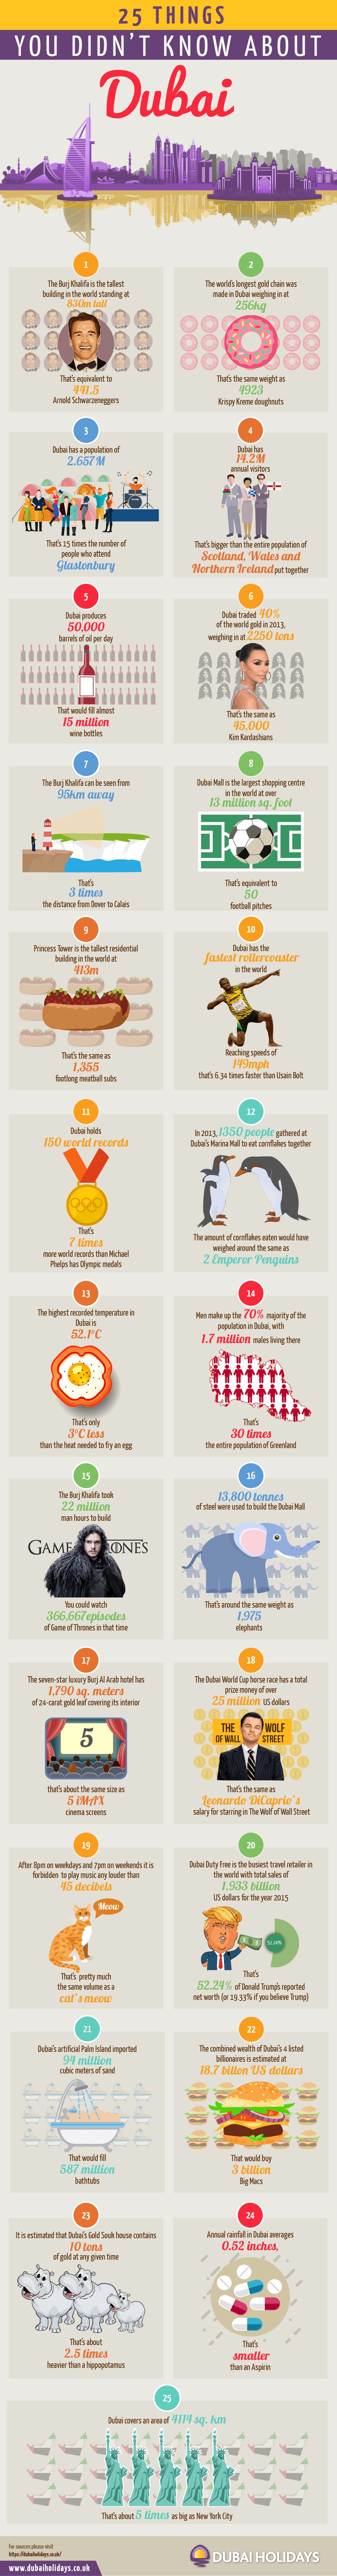 25 Amazing Facts Dubai Infographic